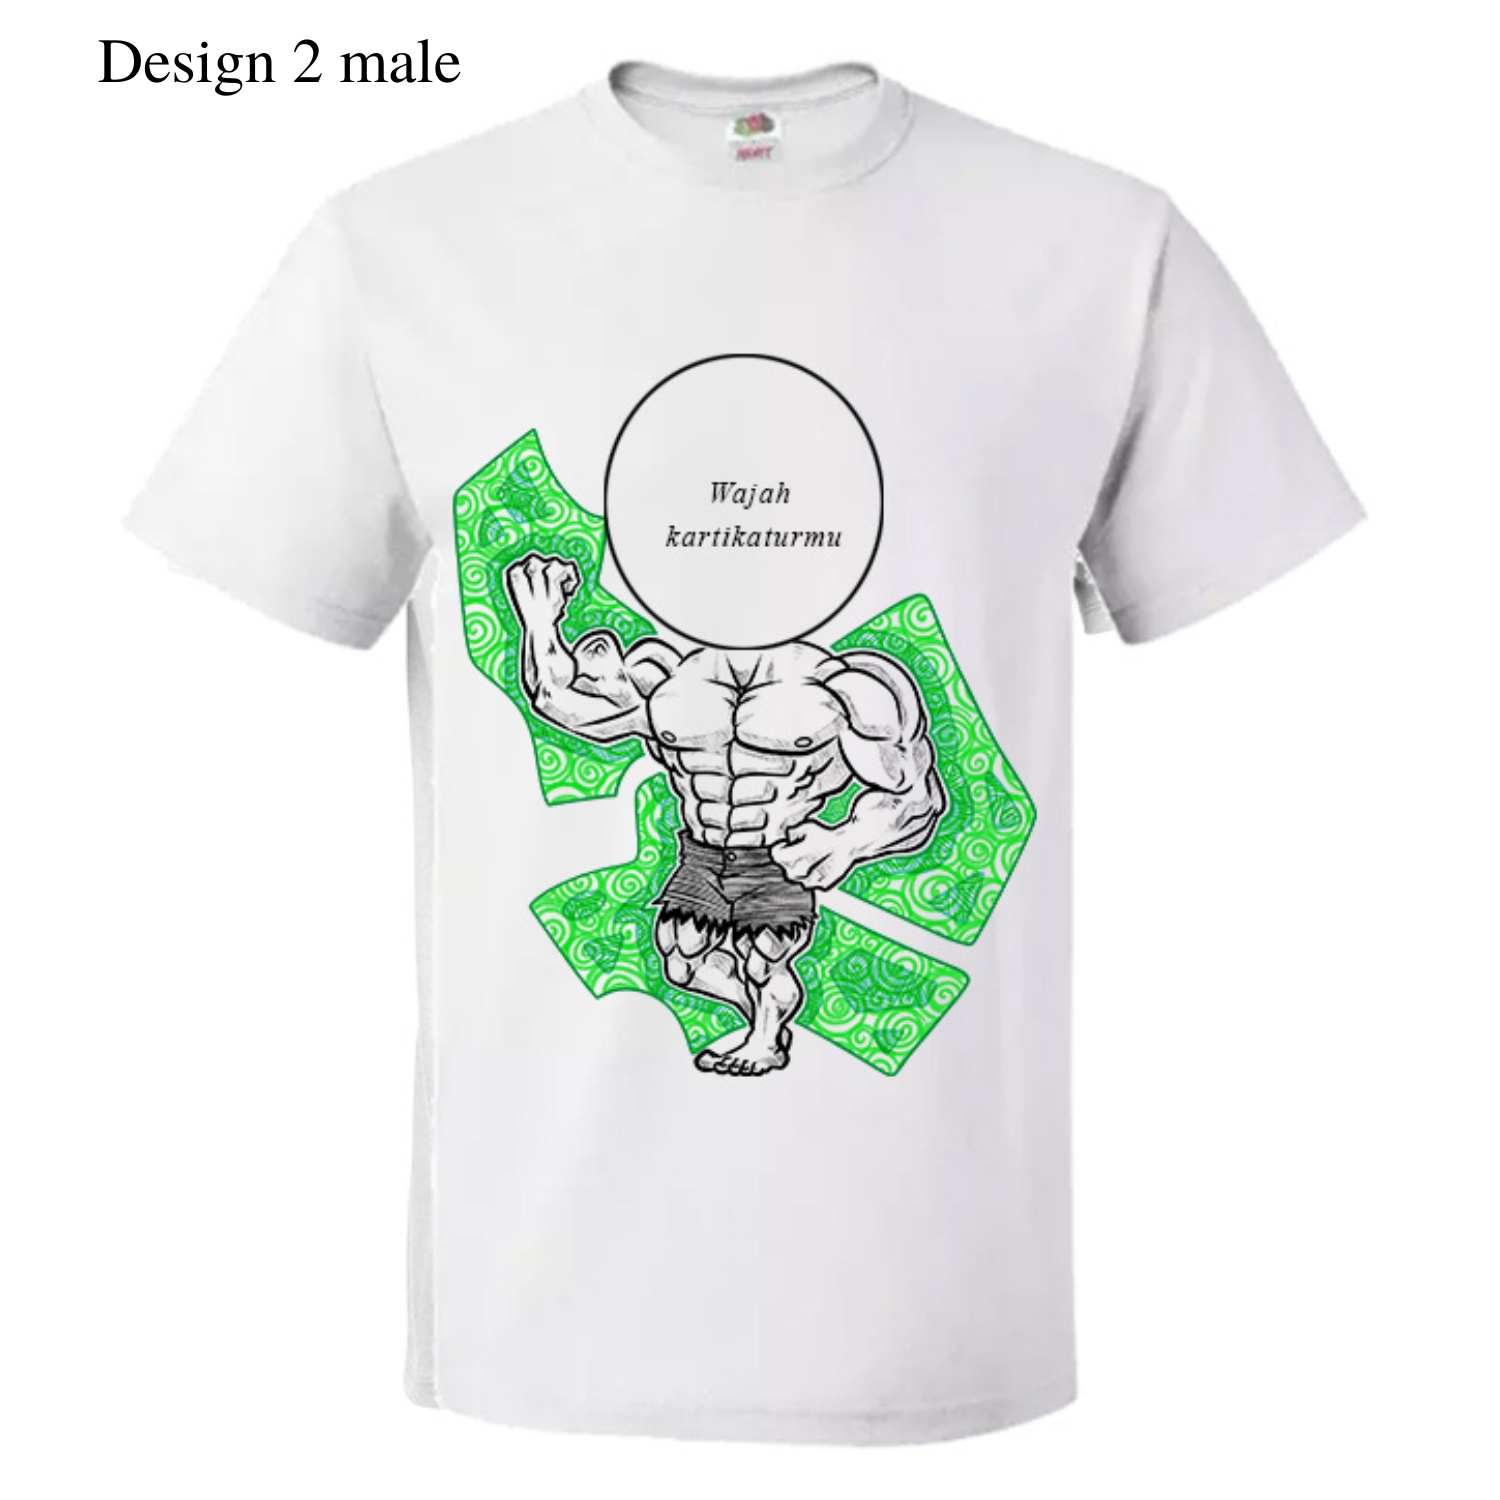 Caricature T-Shirt - Male